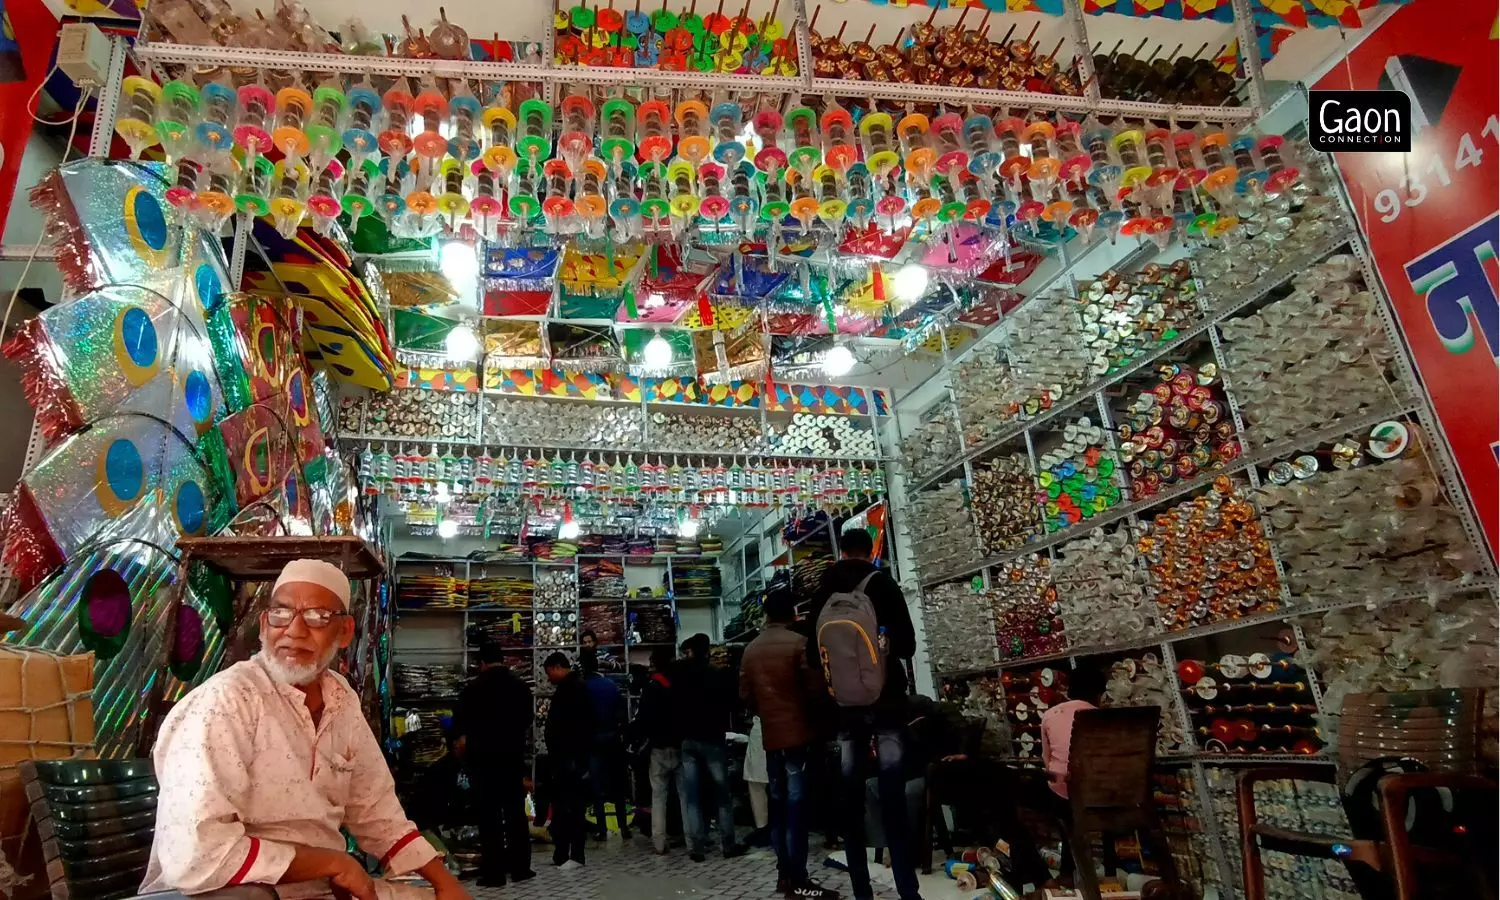 The Kitemakers of Handipura, Jaipur’s 150-yo Kite Market